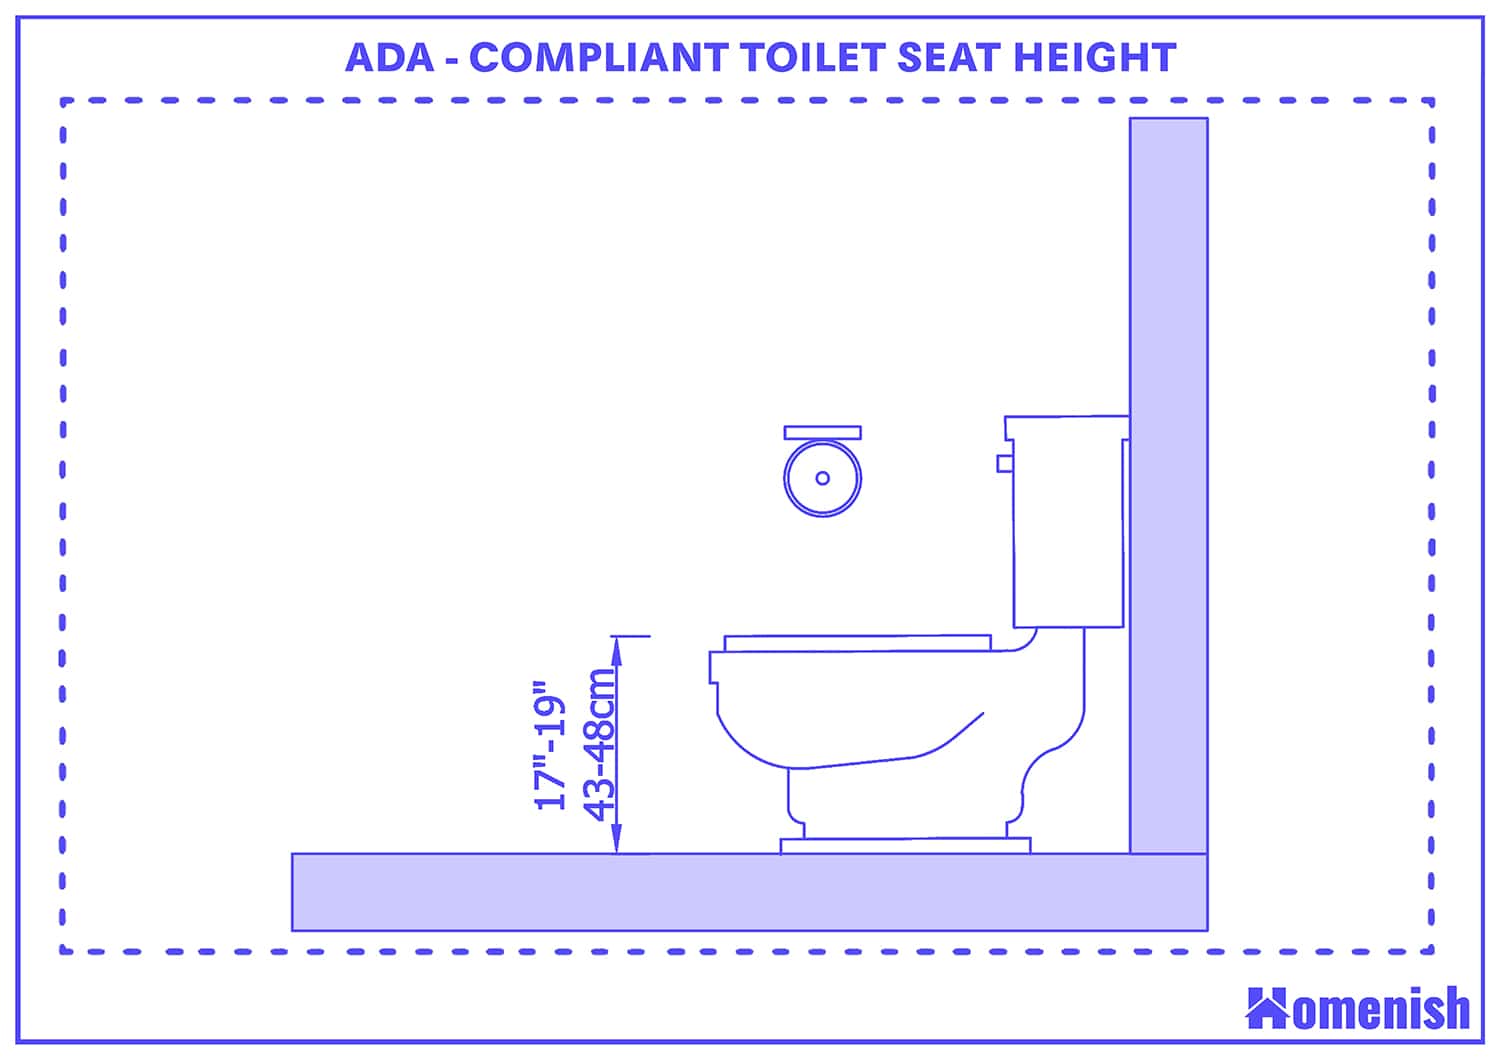 ADA compliant toilet seats